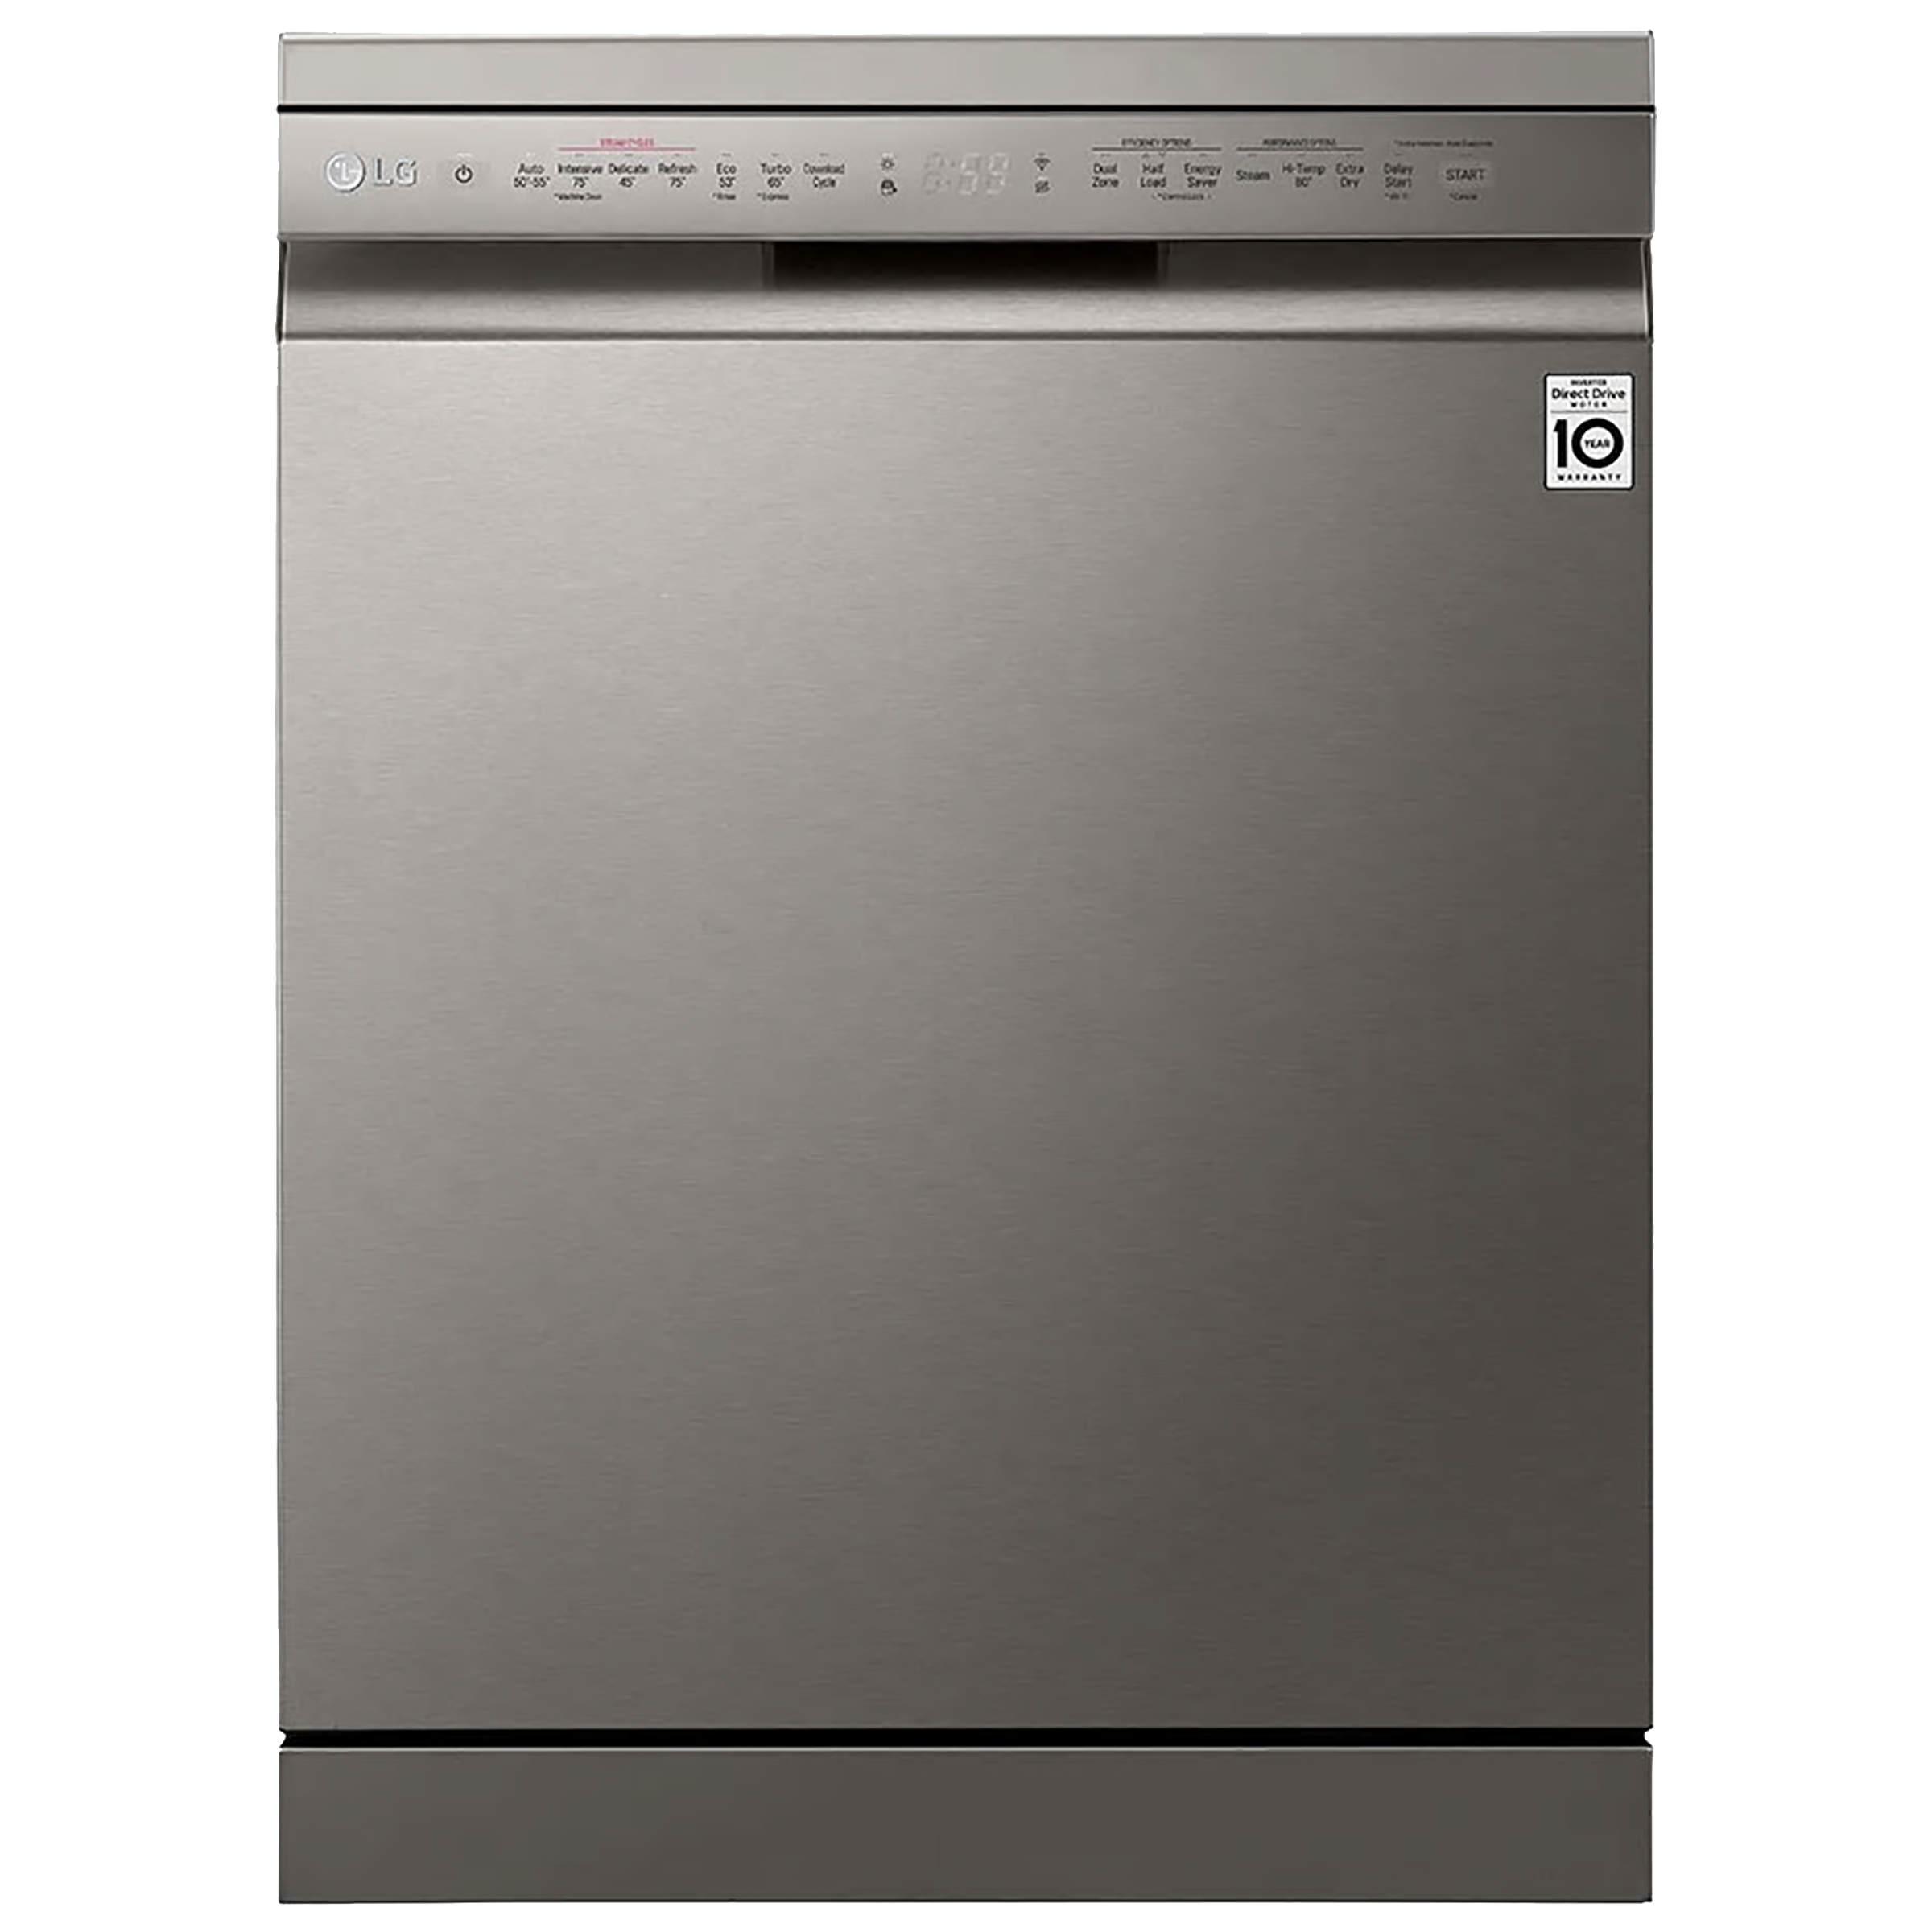 LG - lg 14 Place Setting Freestanding Dishwasher (TrueSteam, DFB424FP.APZPEIL, Silver)